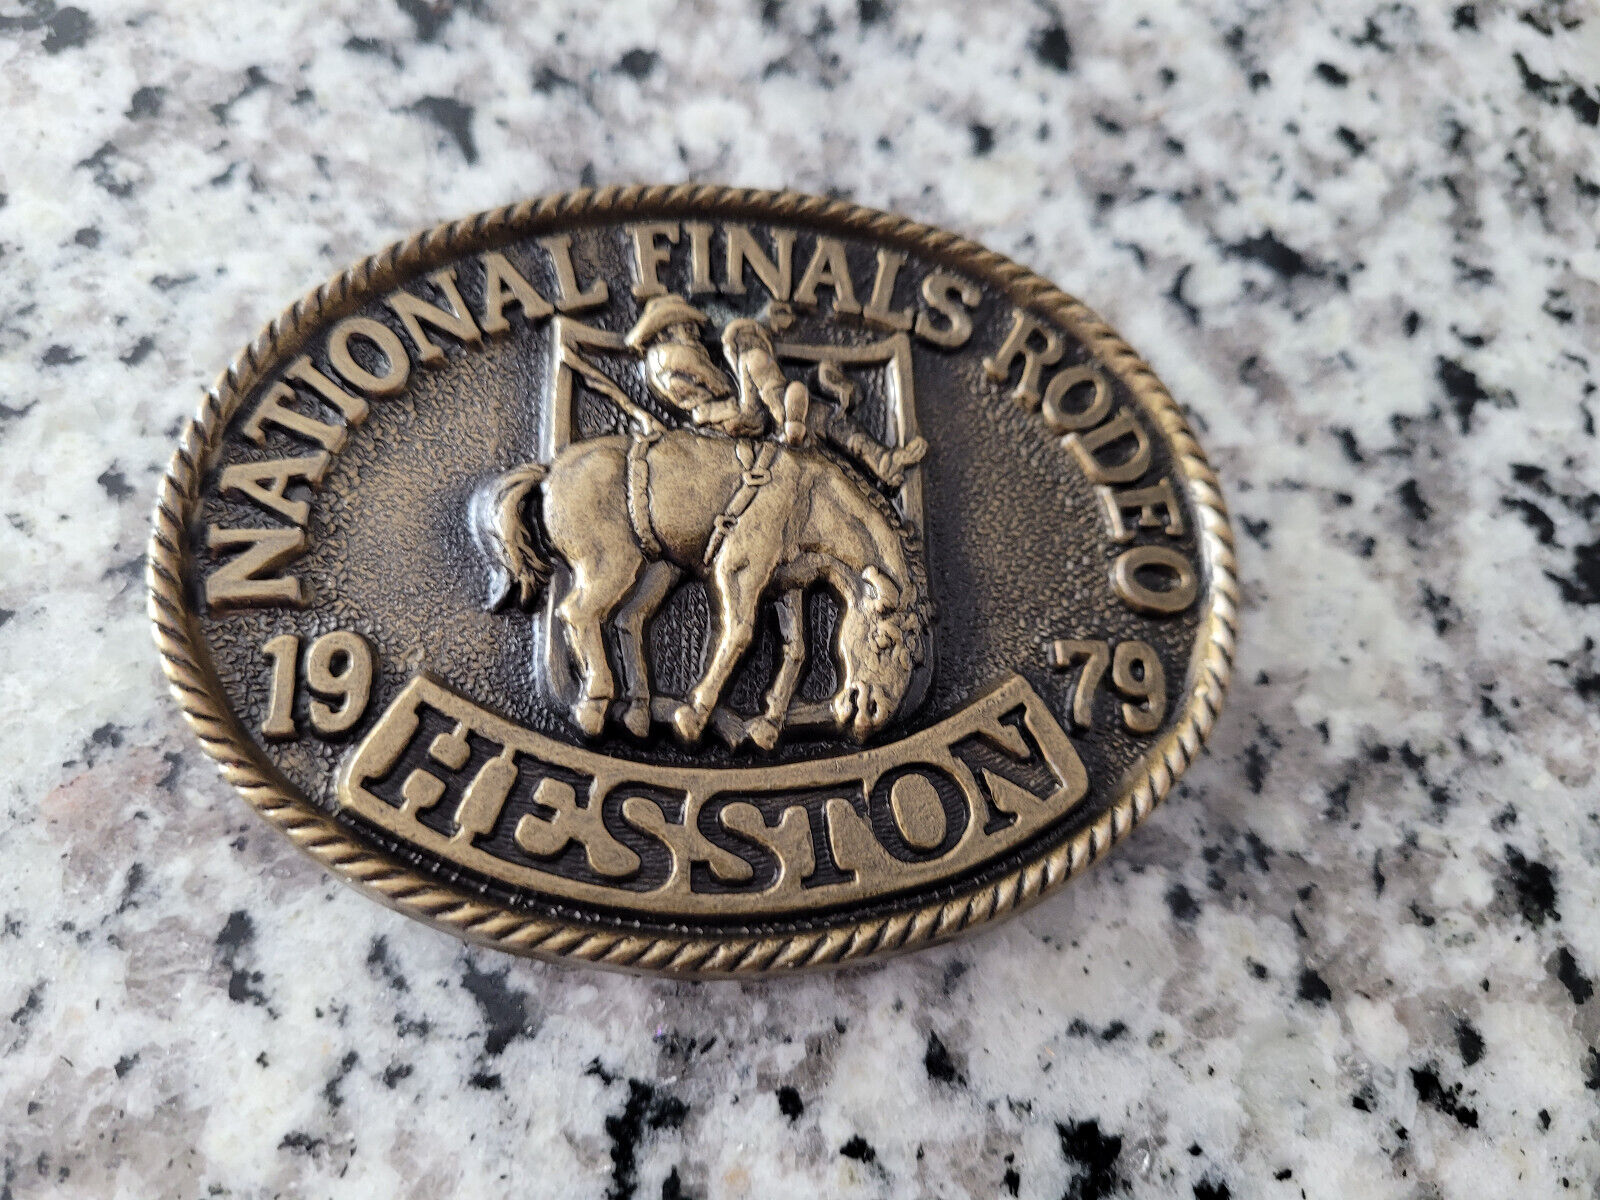 1979 NFR National Finals Rodeo Hesston Belt Buckle